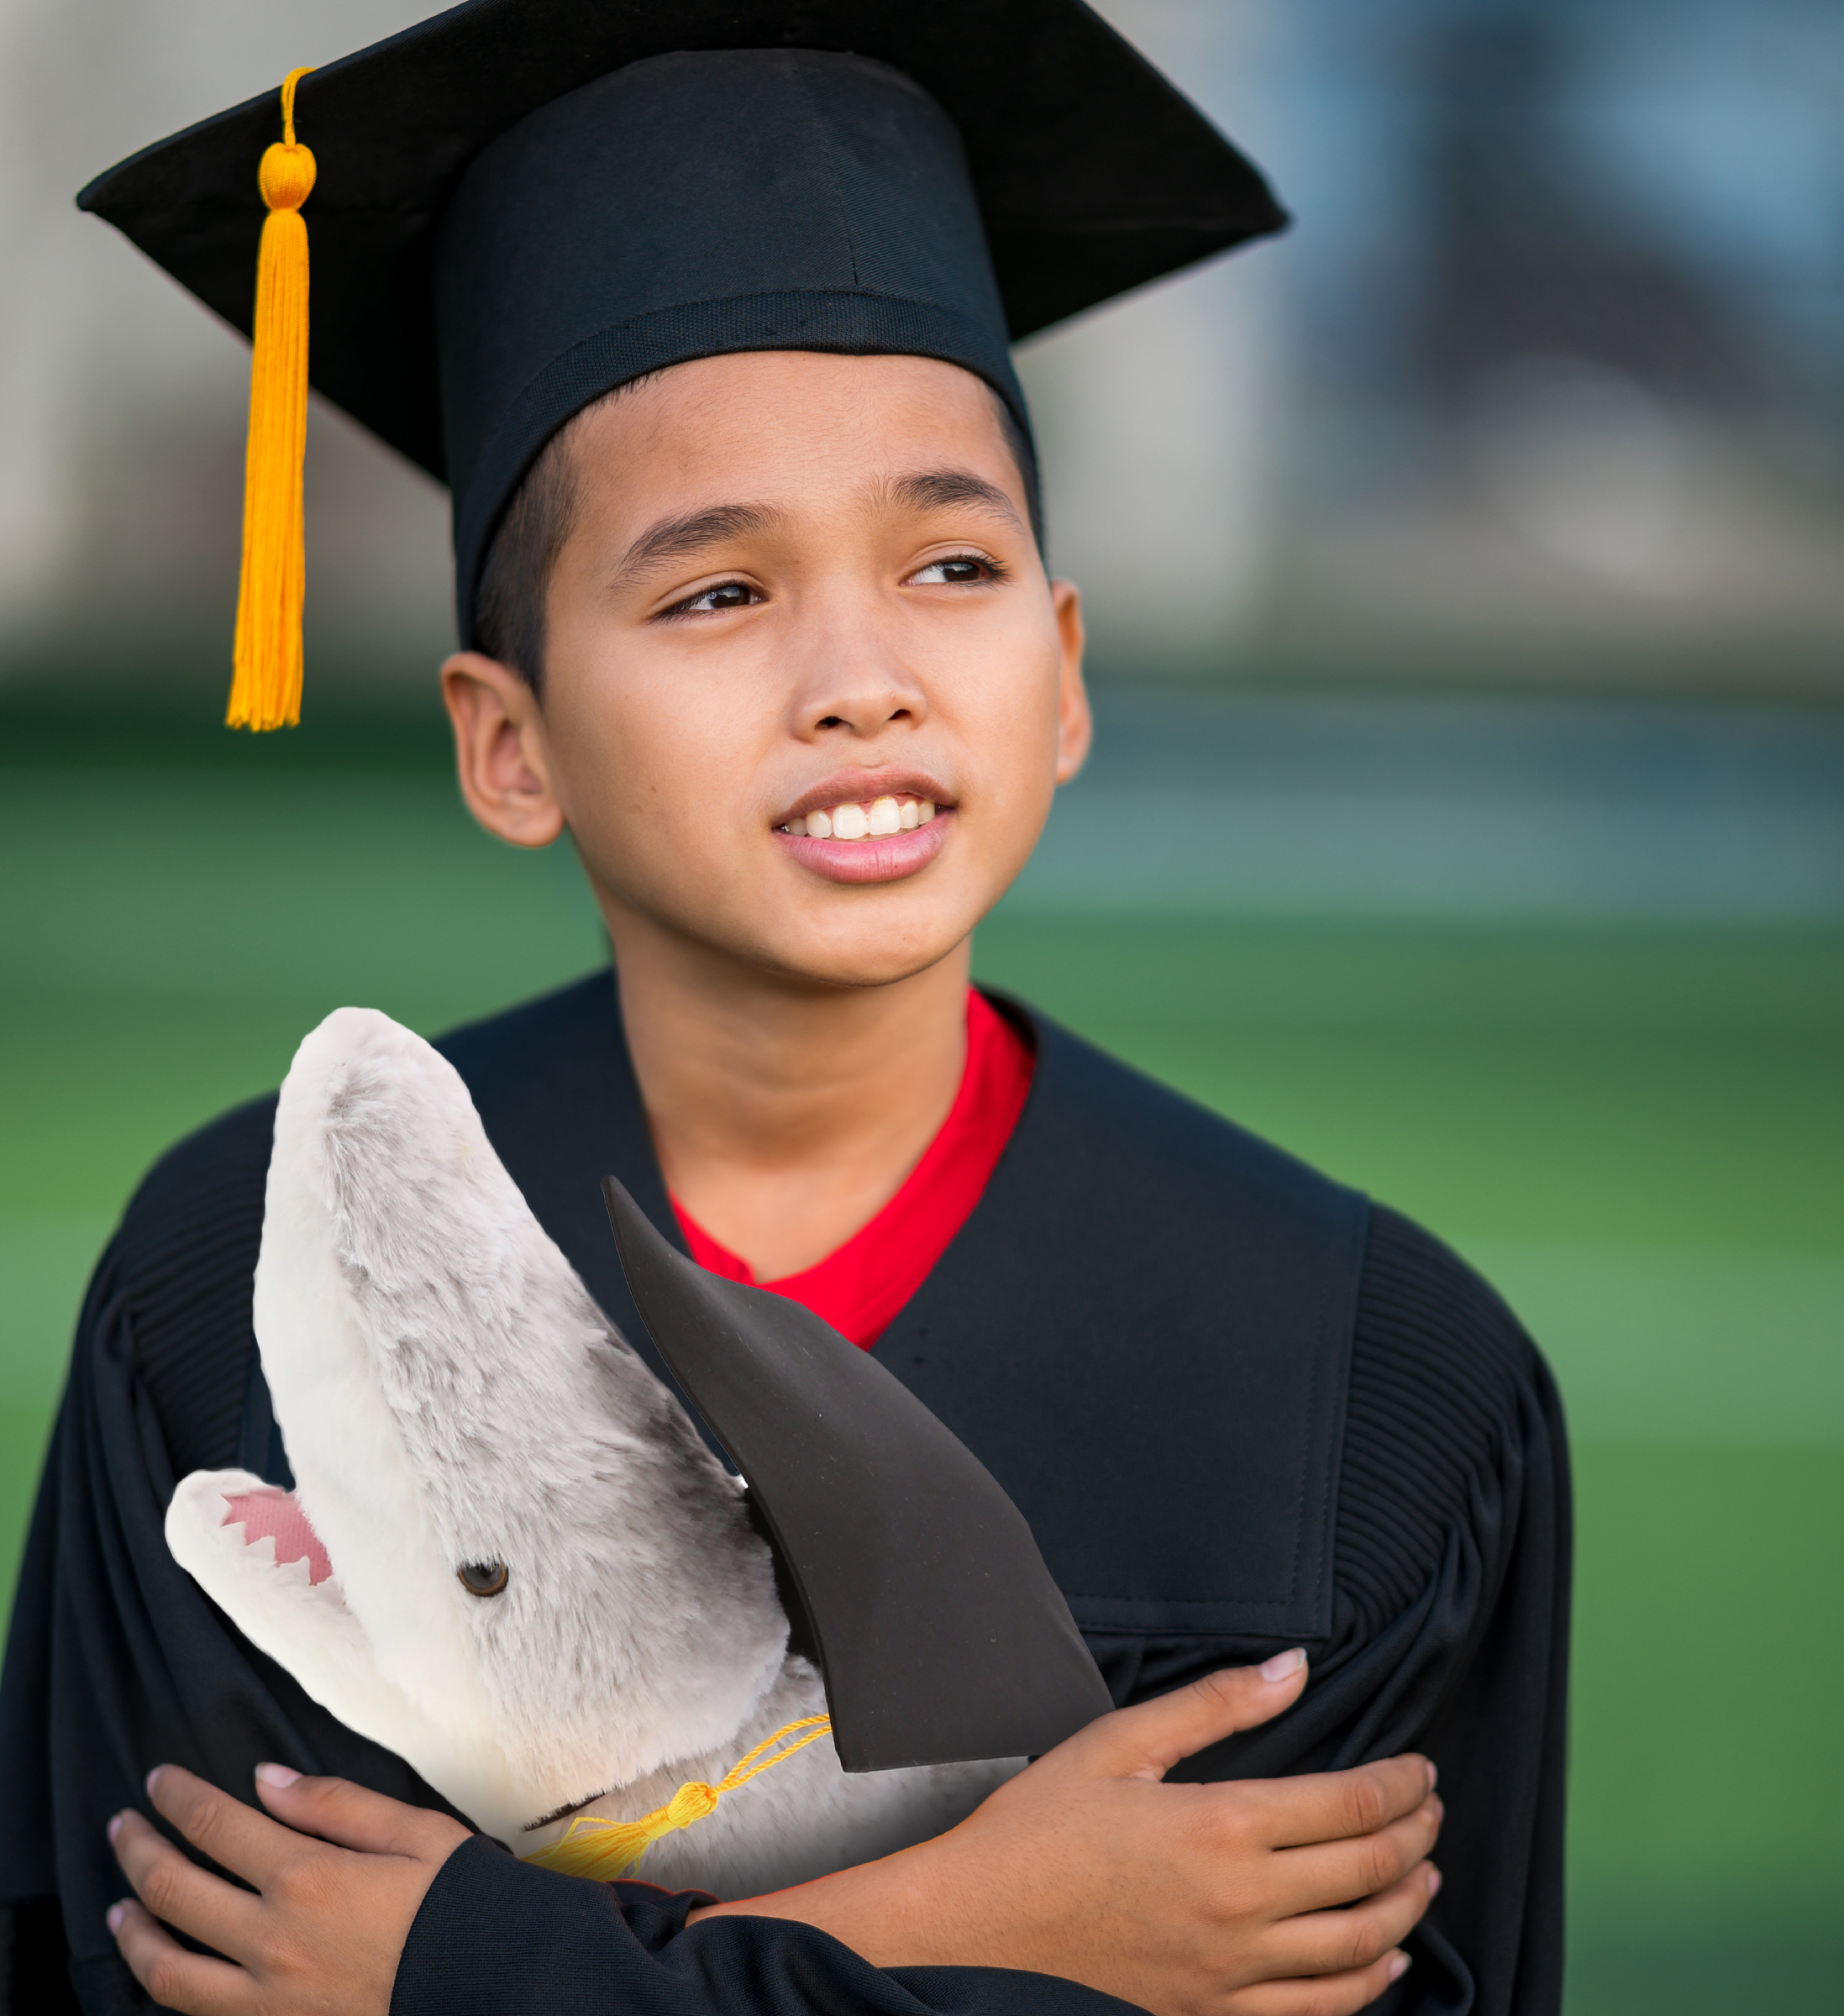 plush toy elephant shark fish photo album 6'' 100pcs Graduation anniversary gift 